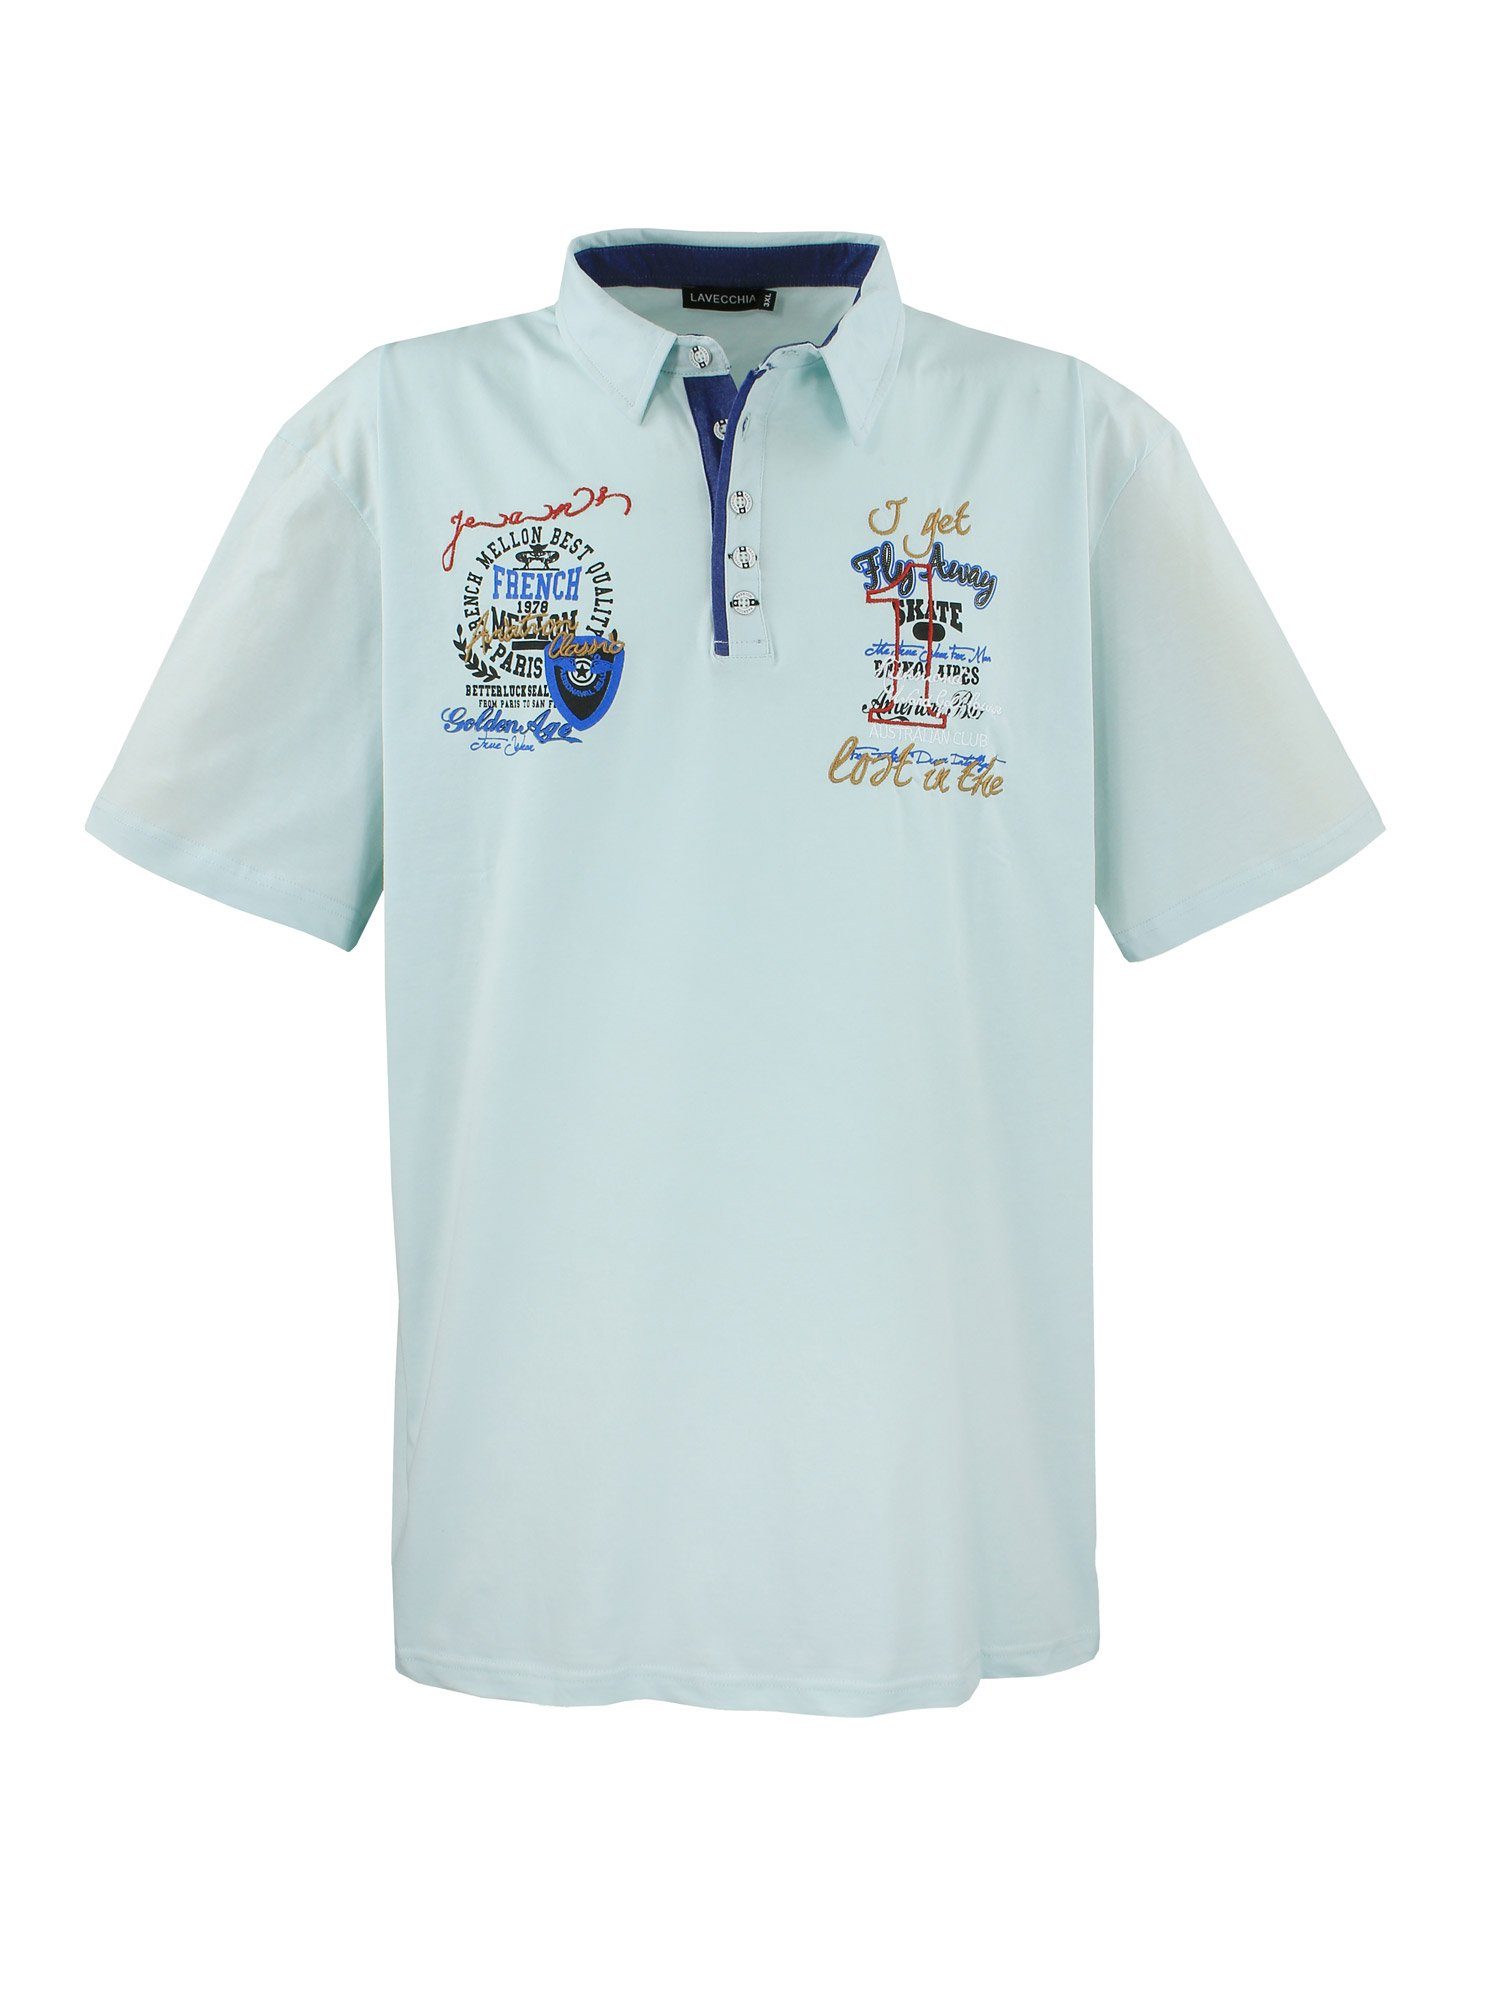 Lavecchia Poloshirt Übergrößen Herren Polo Shirt mint Shirt LV-3101 Herren Polo